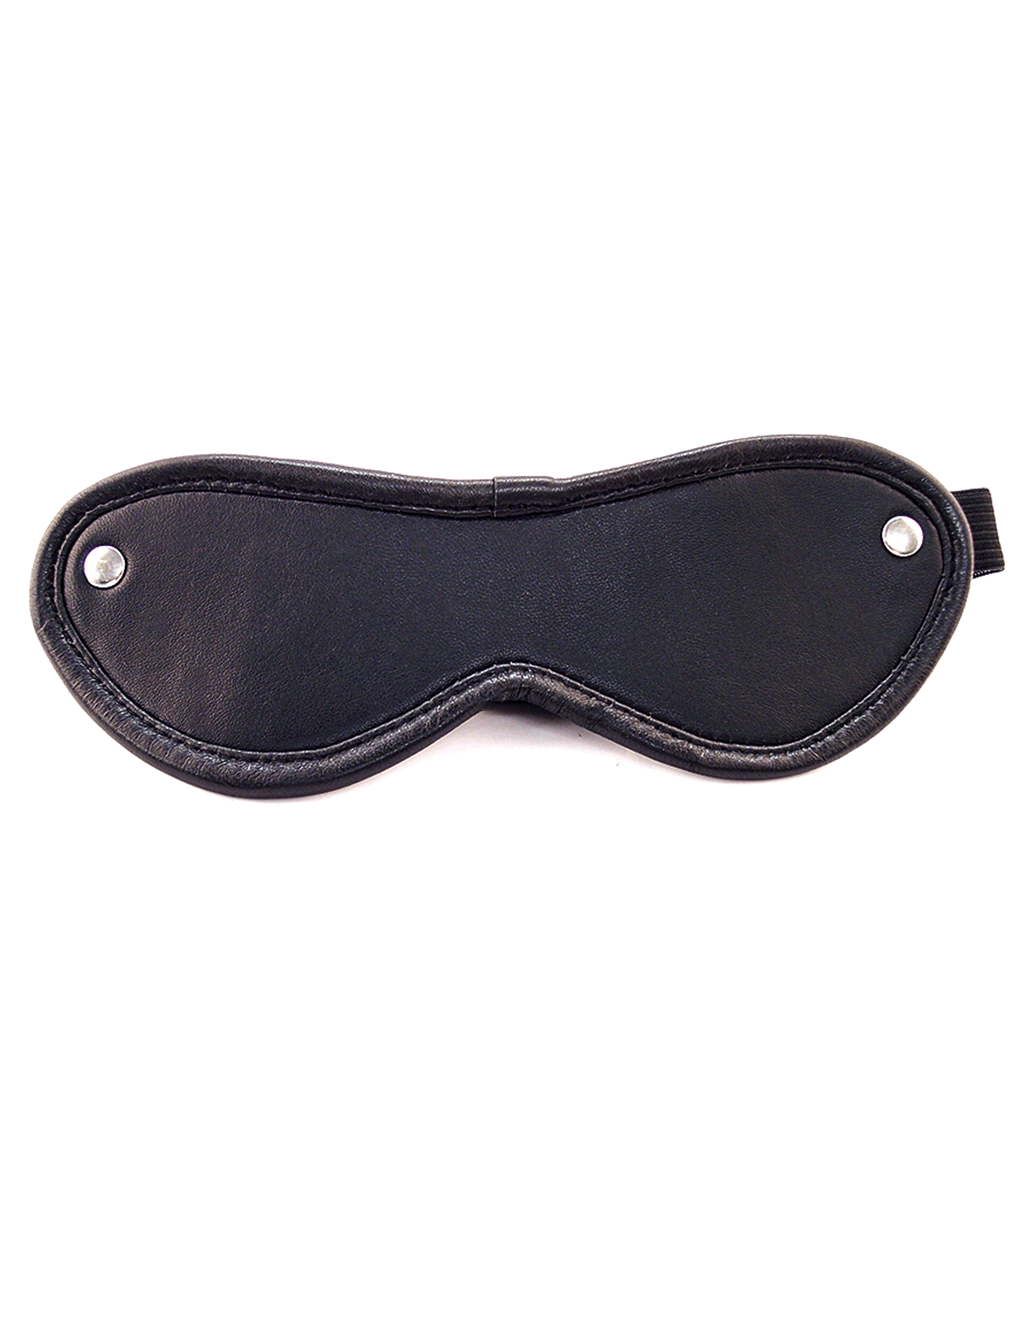 Blindfolds Leather Soft Padded Blindfold for Fetish BDSM Play